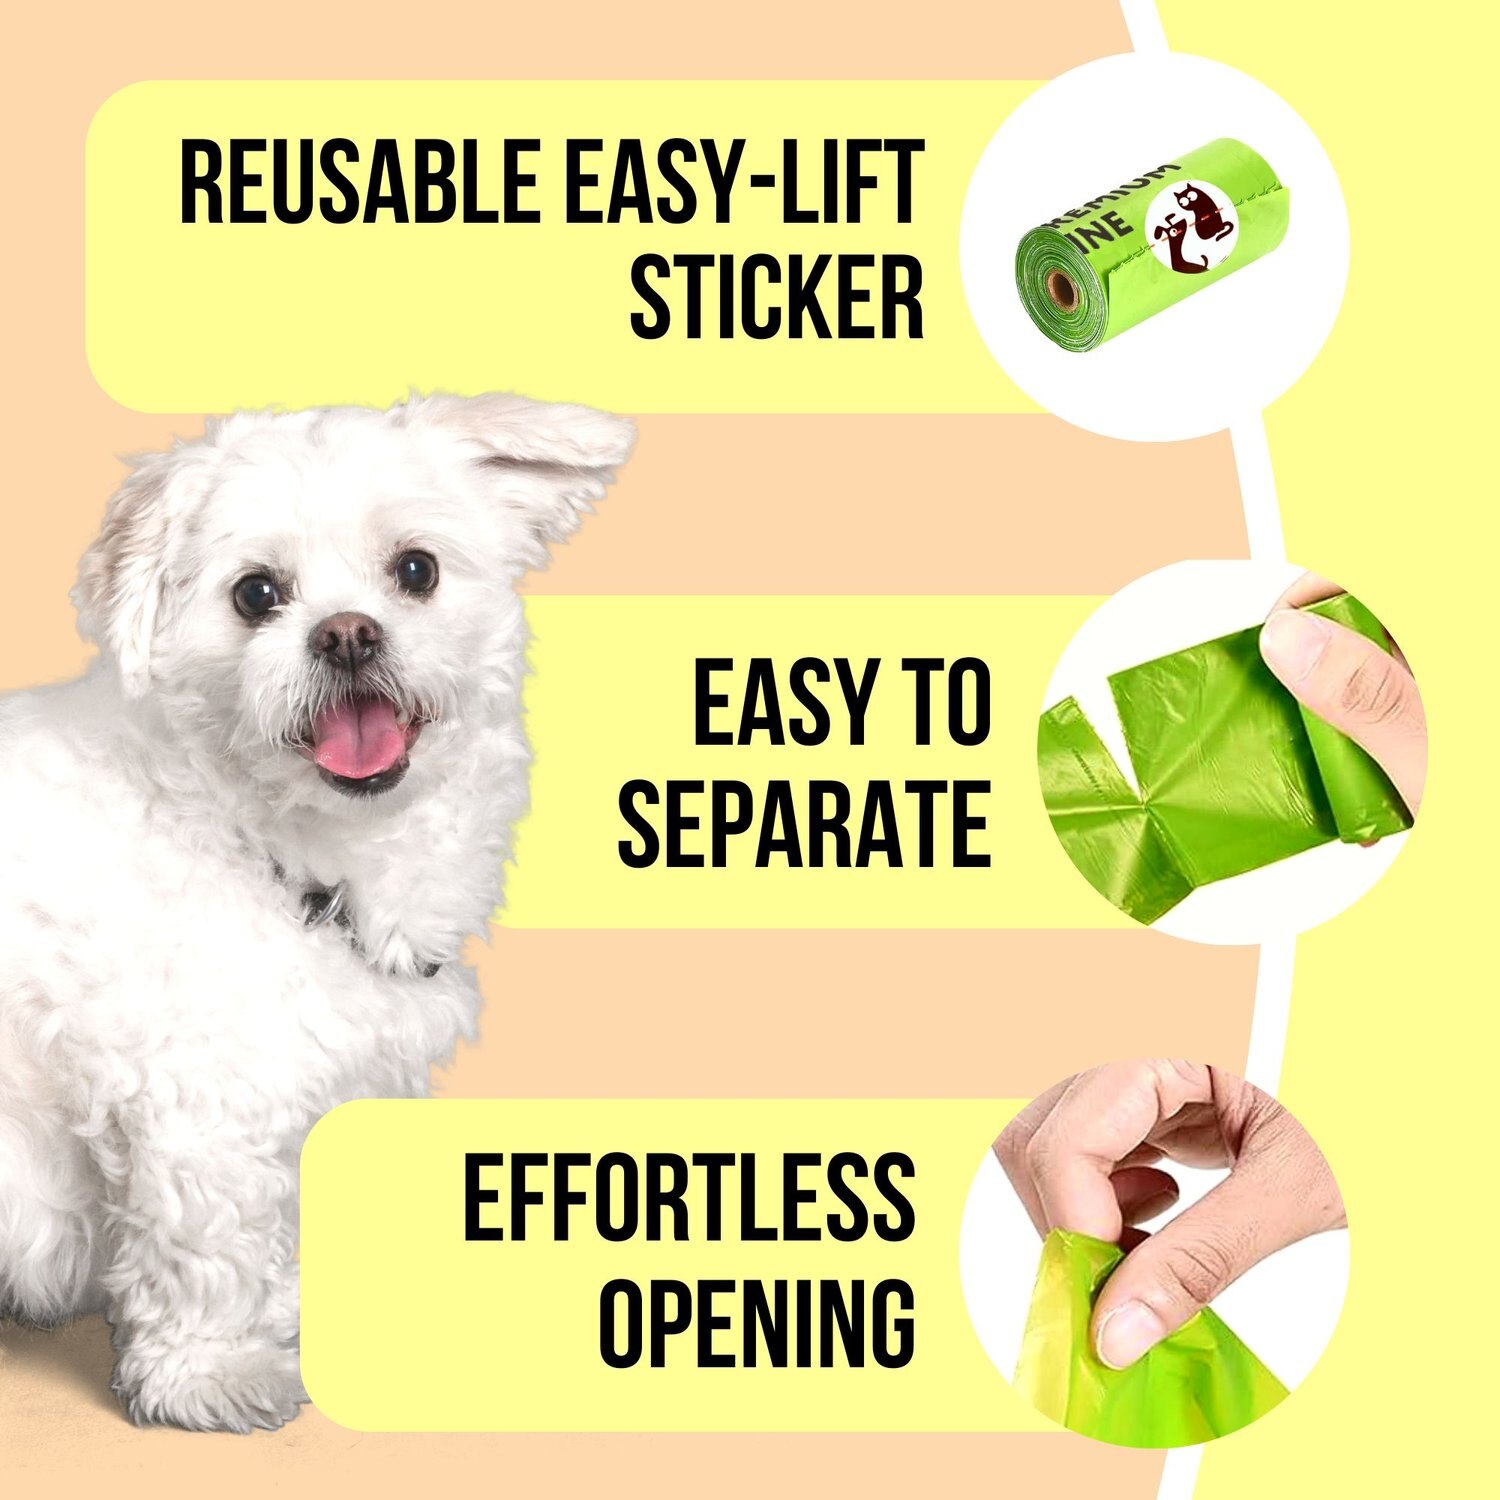 PET N PET Dog Poop Waste Bags With Dispenser 720 Counts Biodegradable Poop Bag Rolls